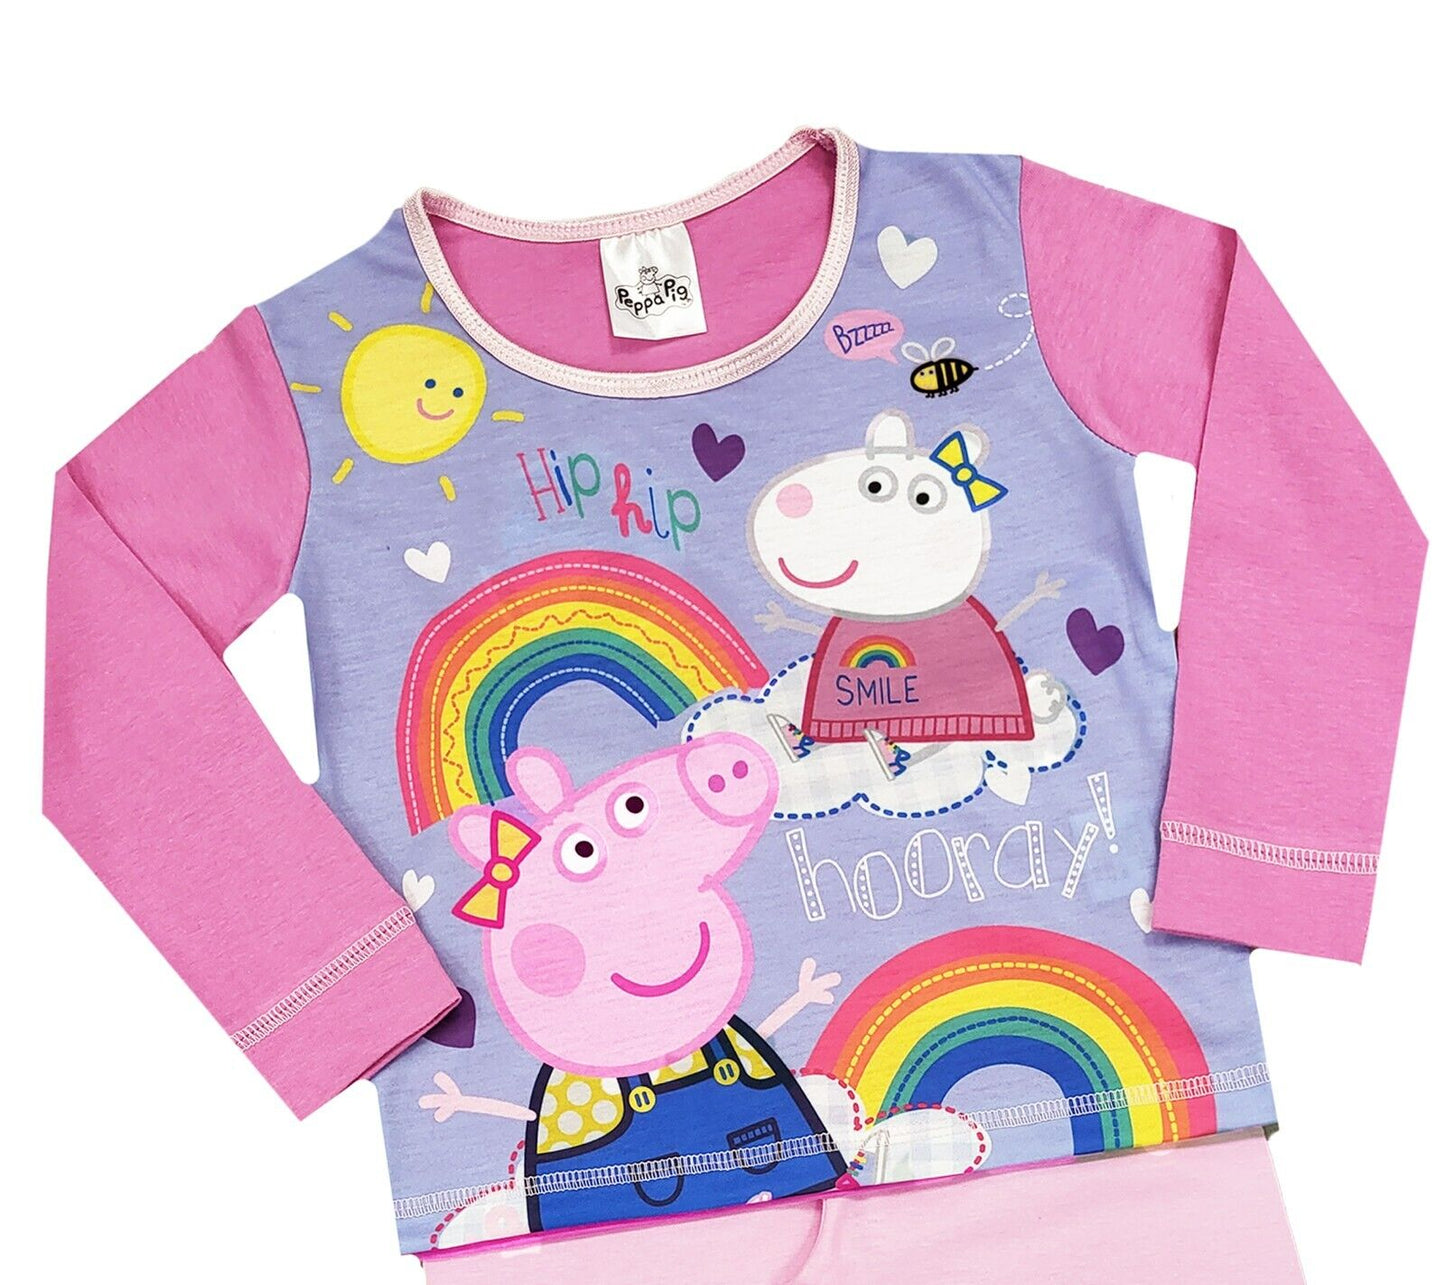 Peppa Pig Long Pyjamas - Hooray